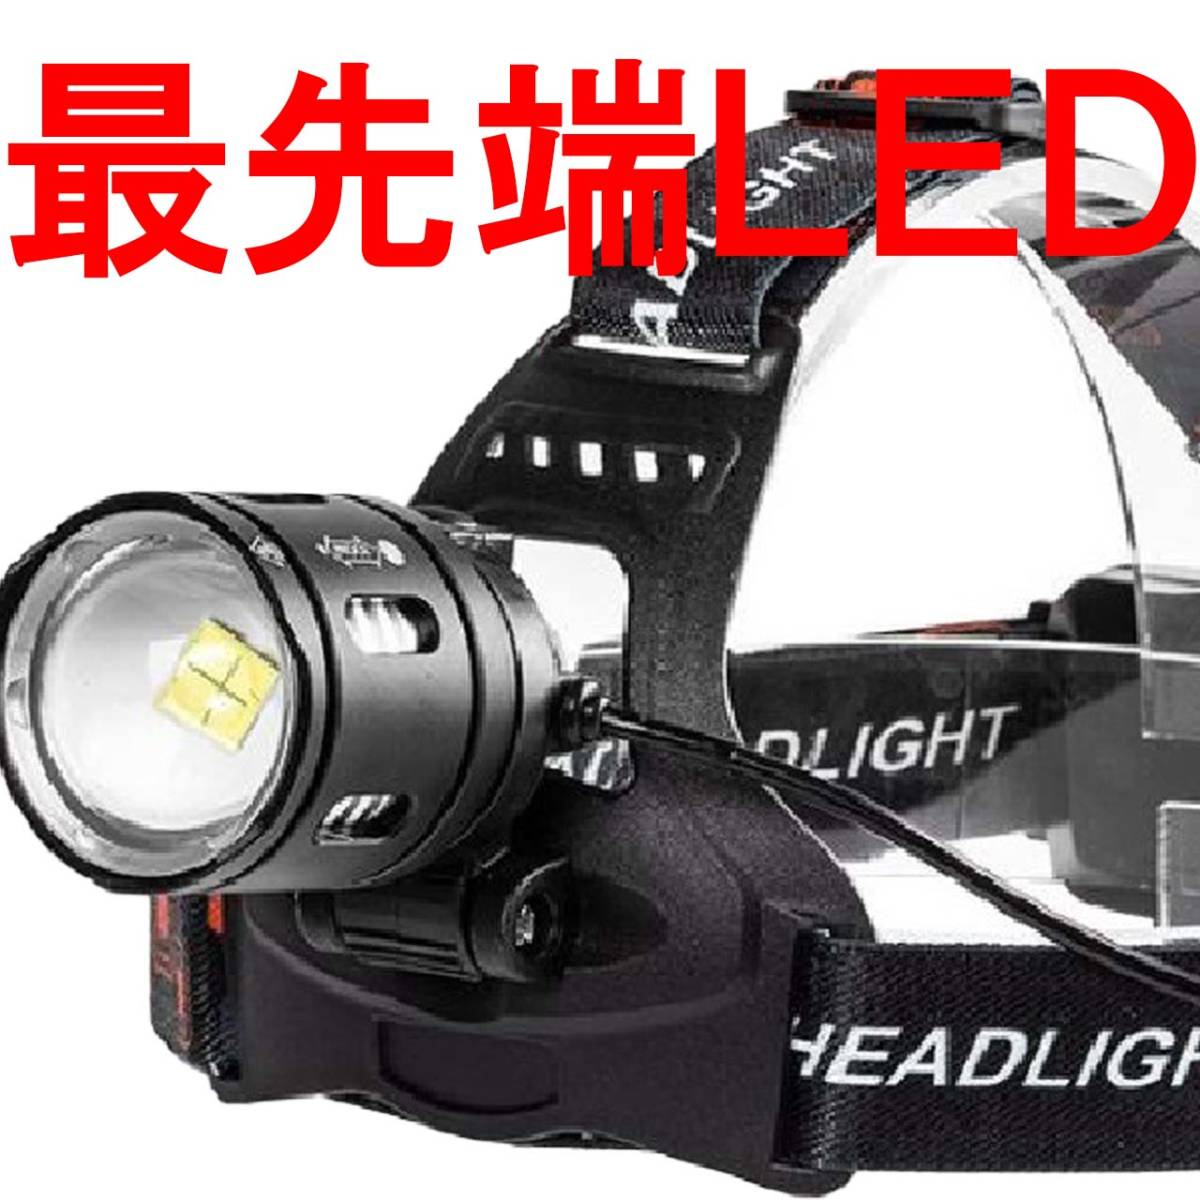 LED ヘッドライト 充電池 充電式 明るい 登山 釣り 夜釣り キャンプ アウトドア 防災 災害 非常用 懐中電灯 ワークライト 驚愕黒赤セット02_画像1